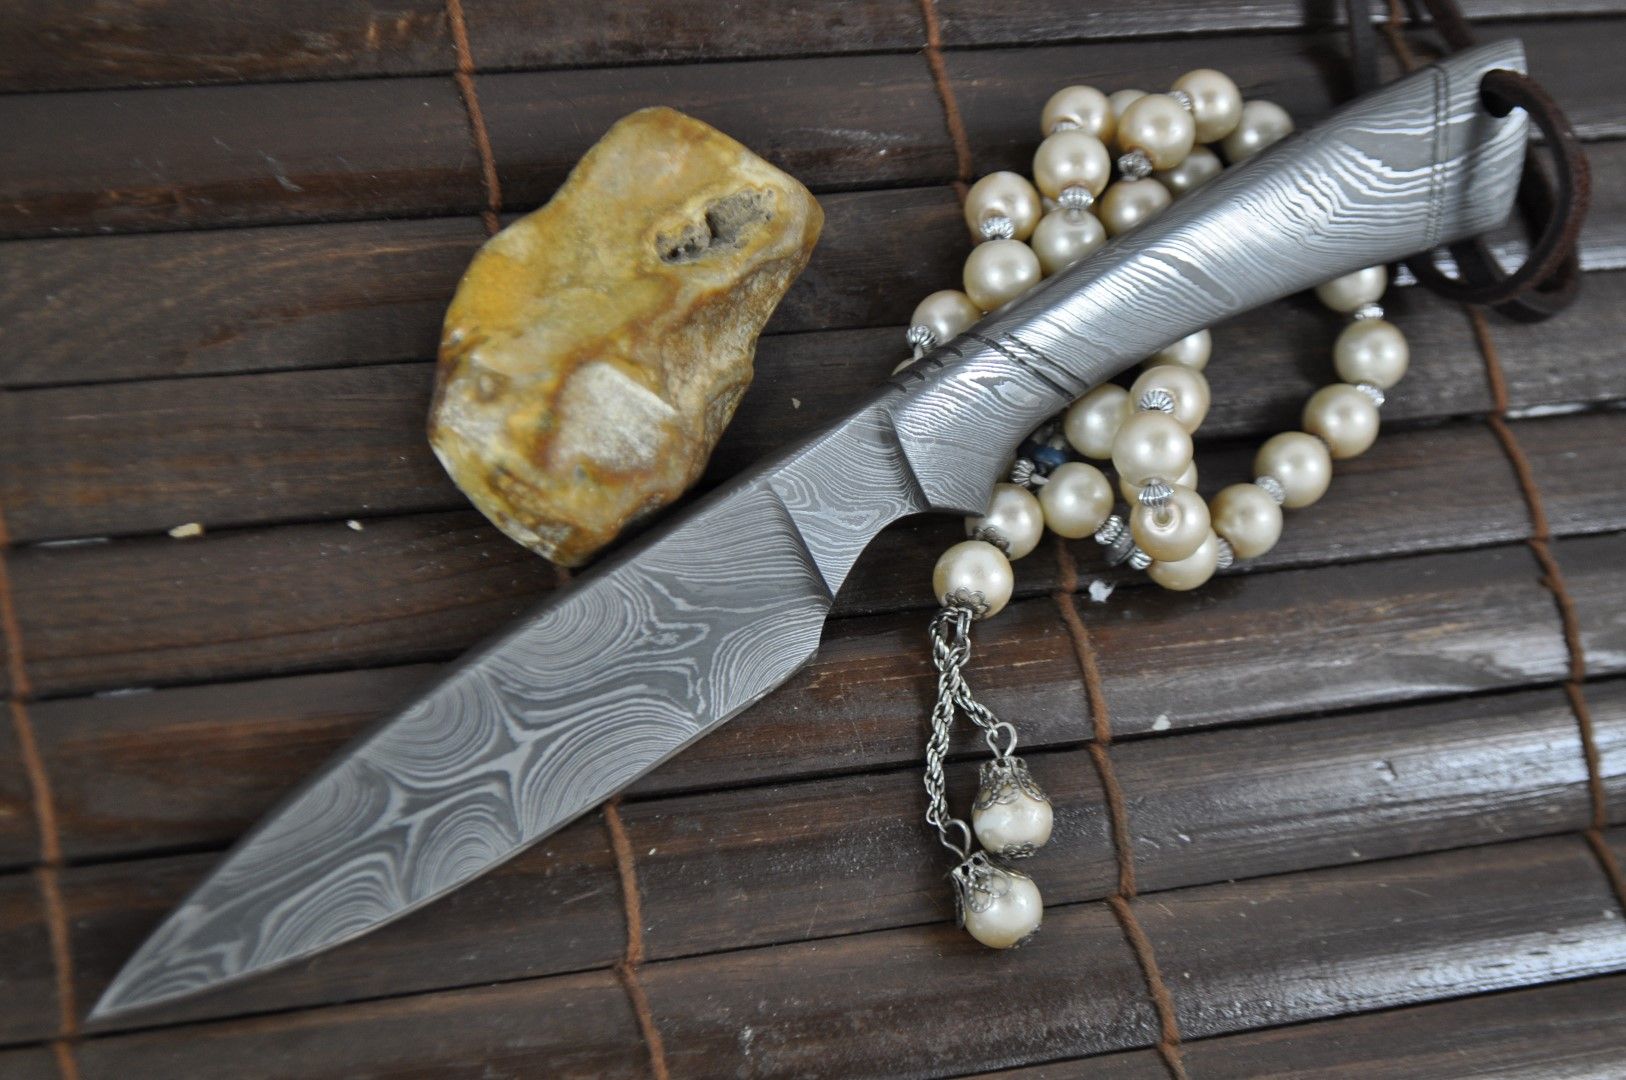 Beautiful Custom All Damascus Knife with Leather Sheath